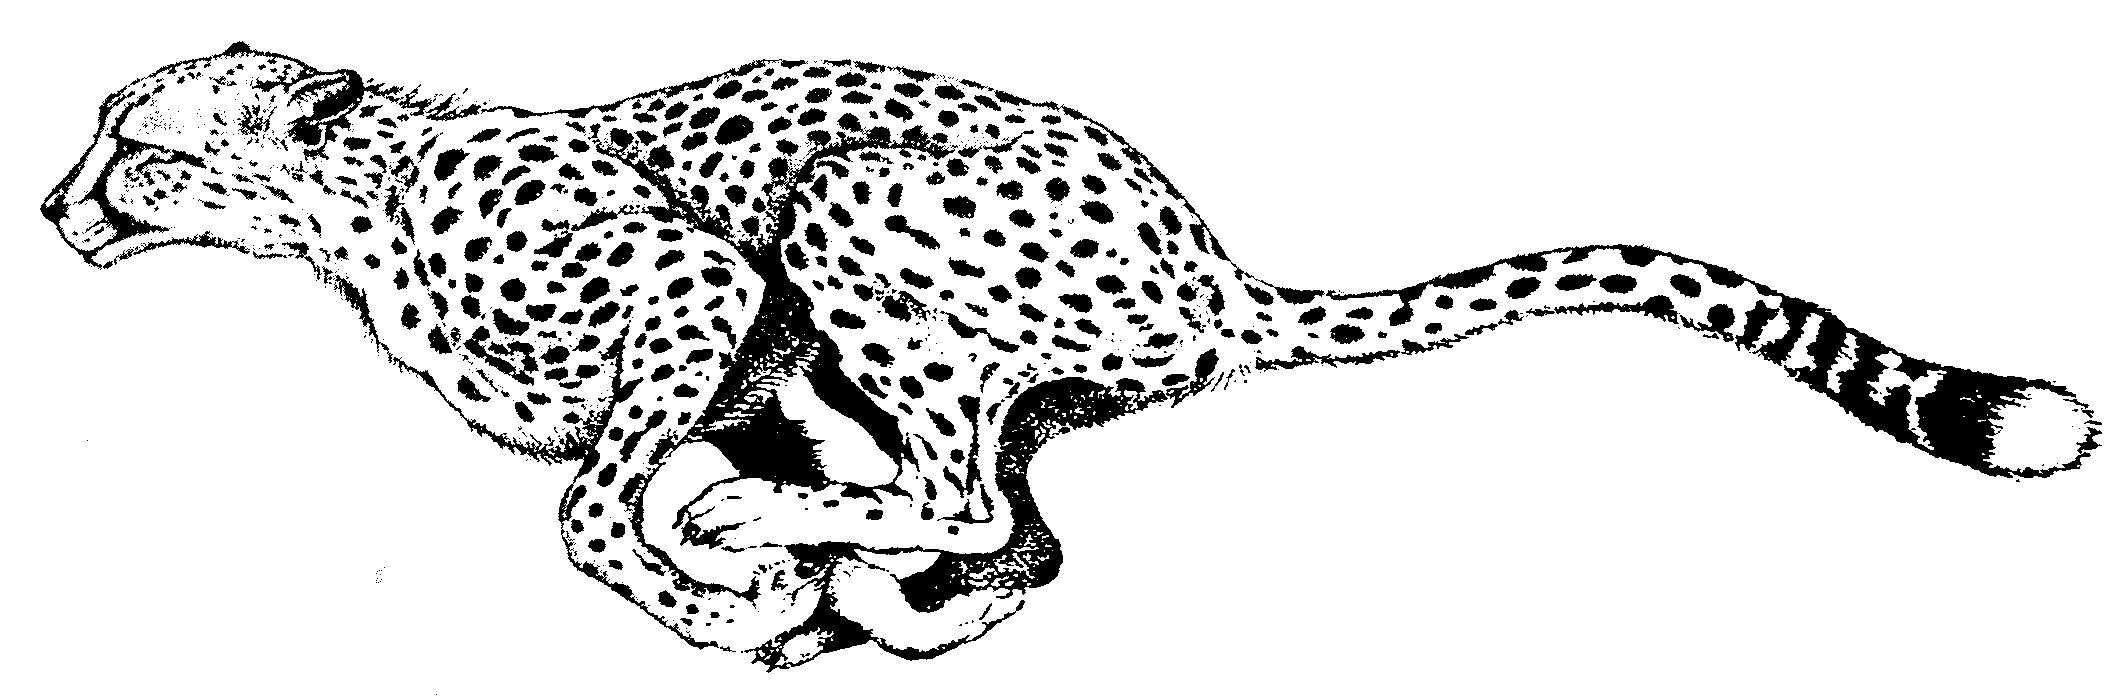 cheetah black and white clip art   Clip Art Library